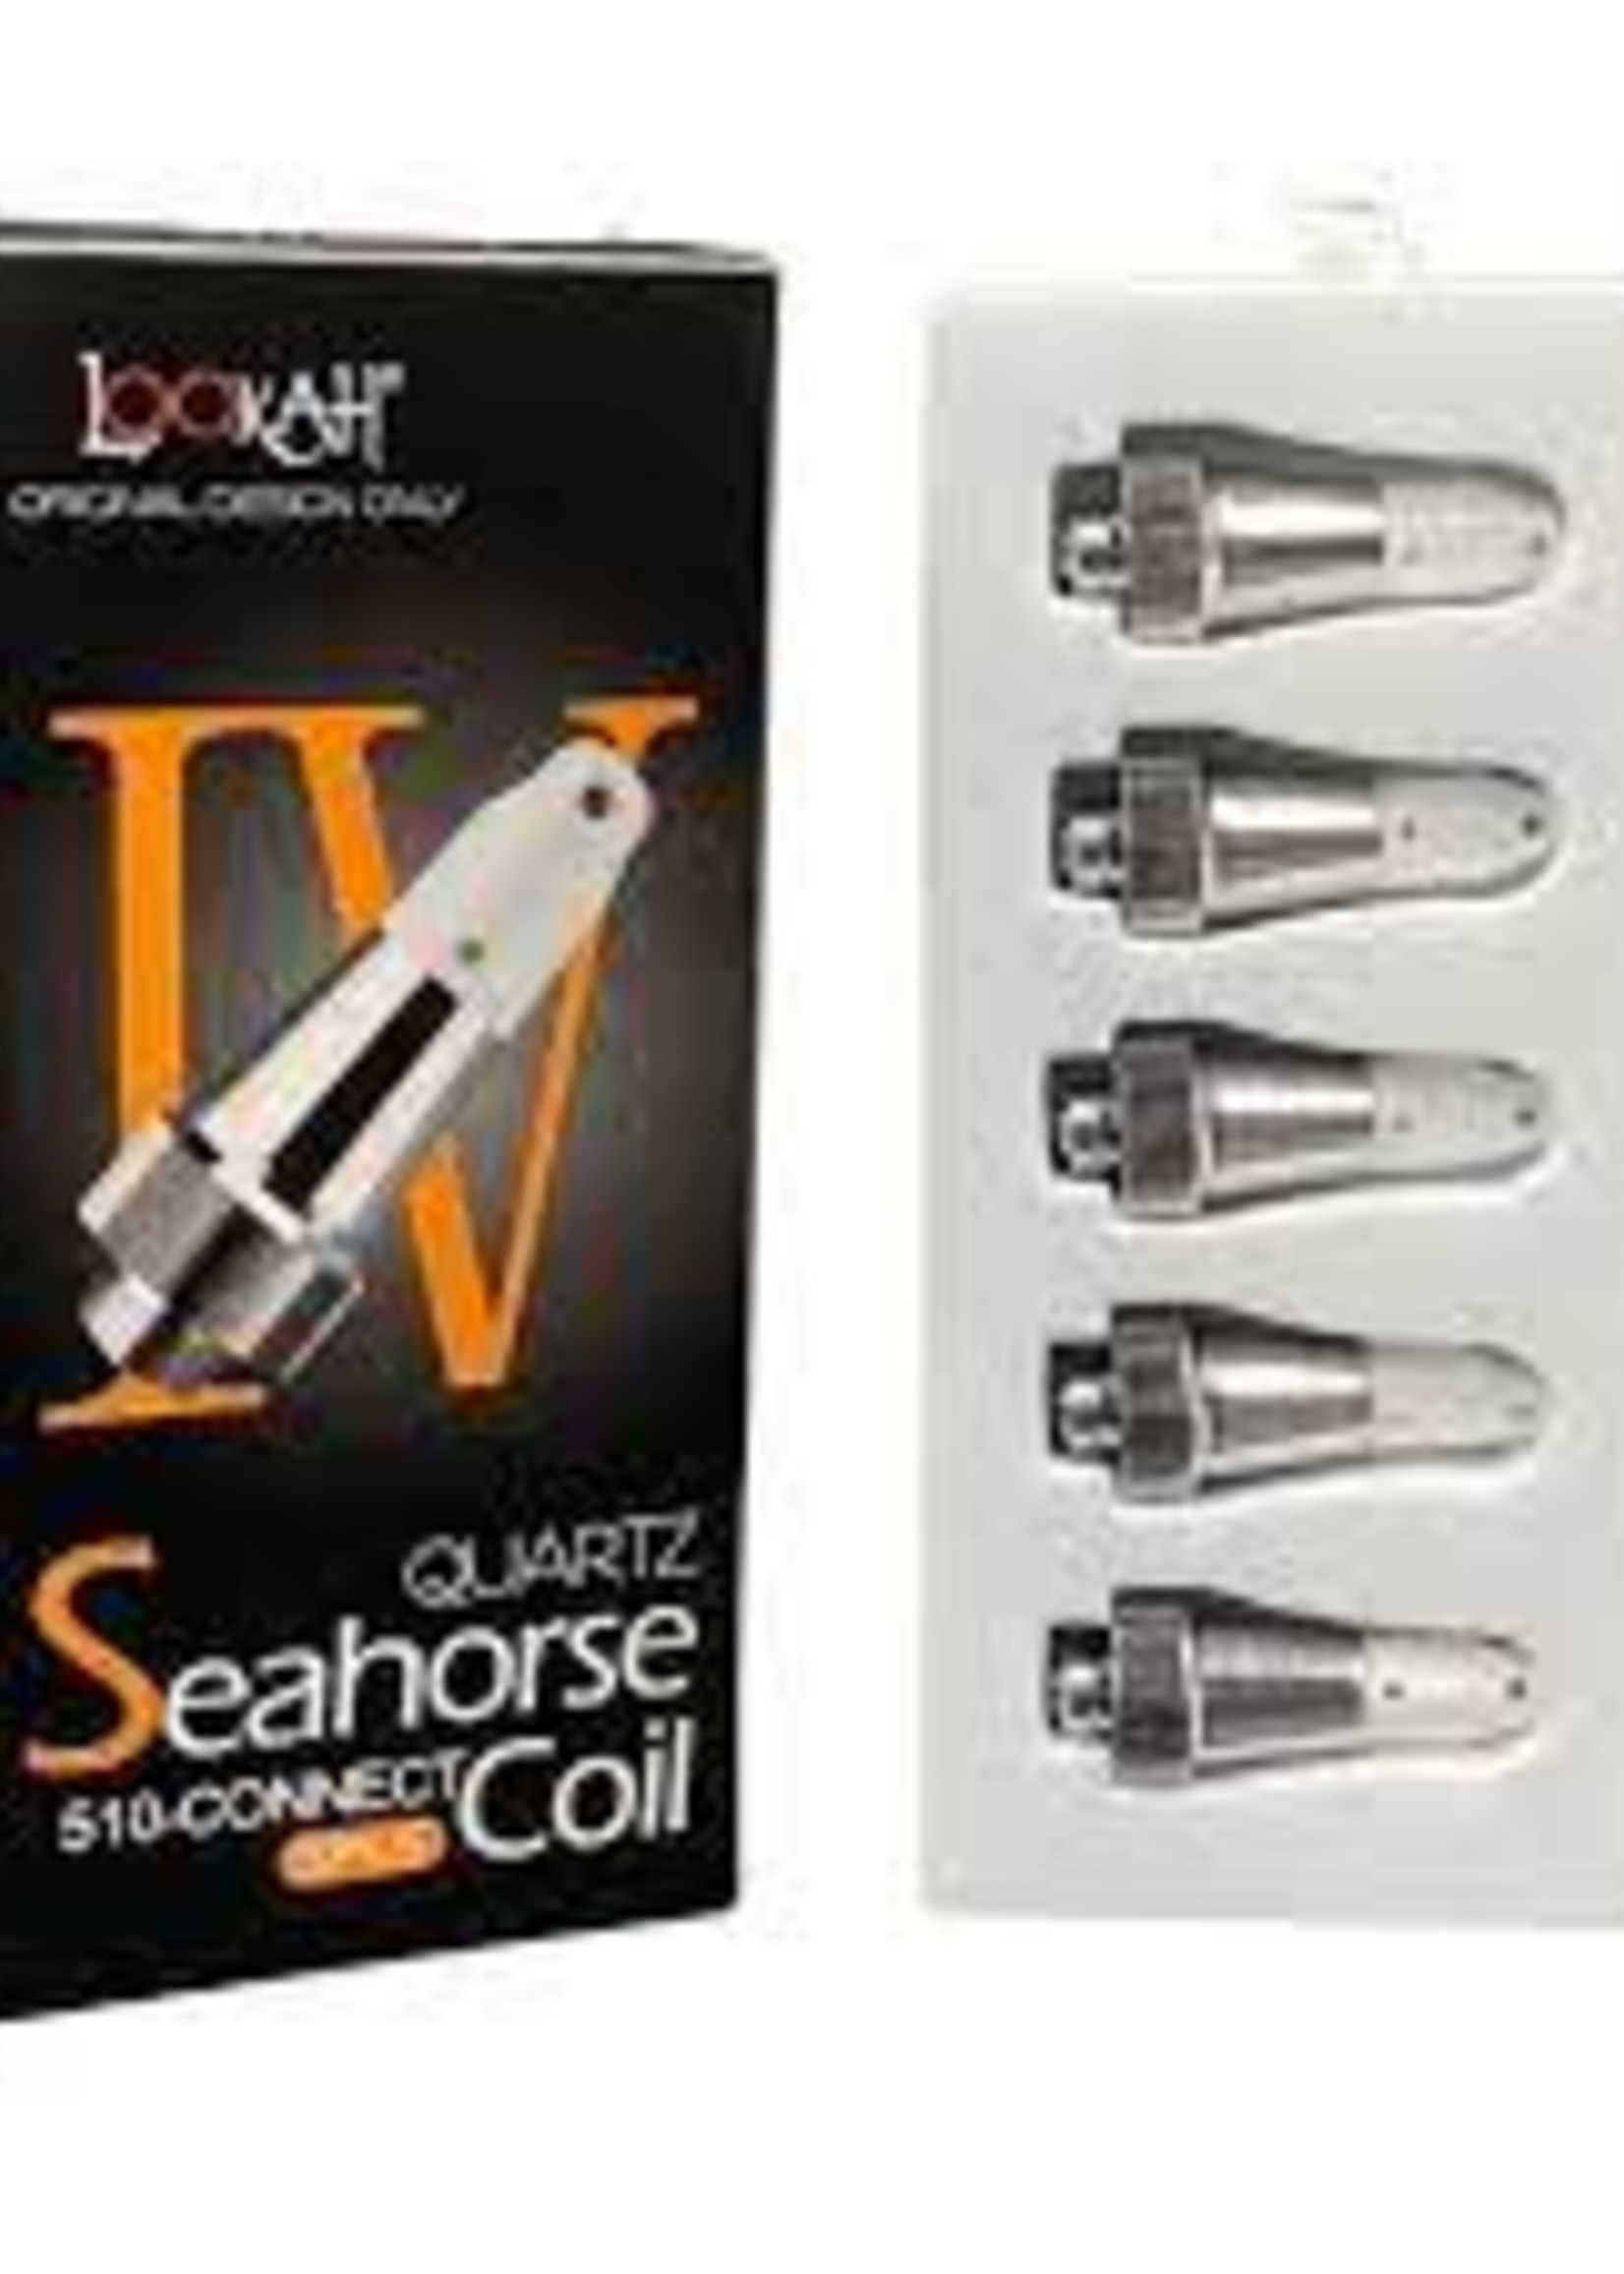 Lookah Lookah Seahorse IV Quartz Replacement Coils - Pack of 5